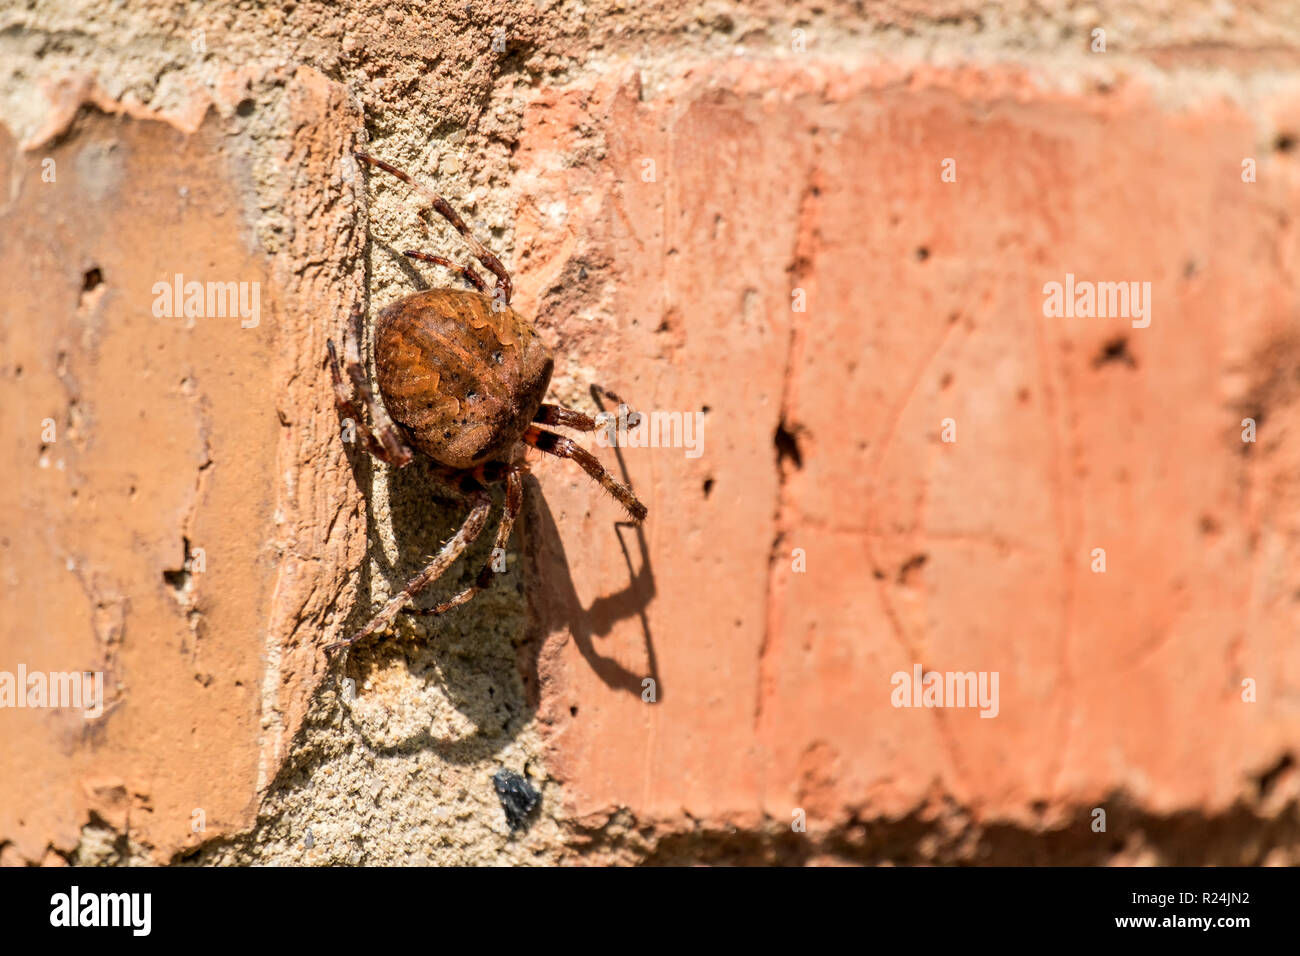 Araña cruz sentado en un muro de ladrillo (Araneus diadematus) Foto de stock